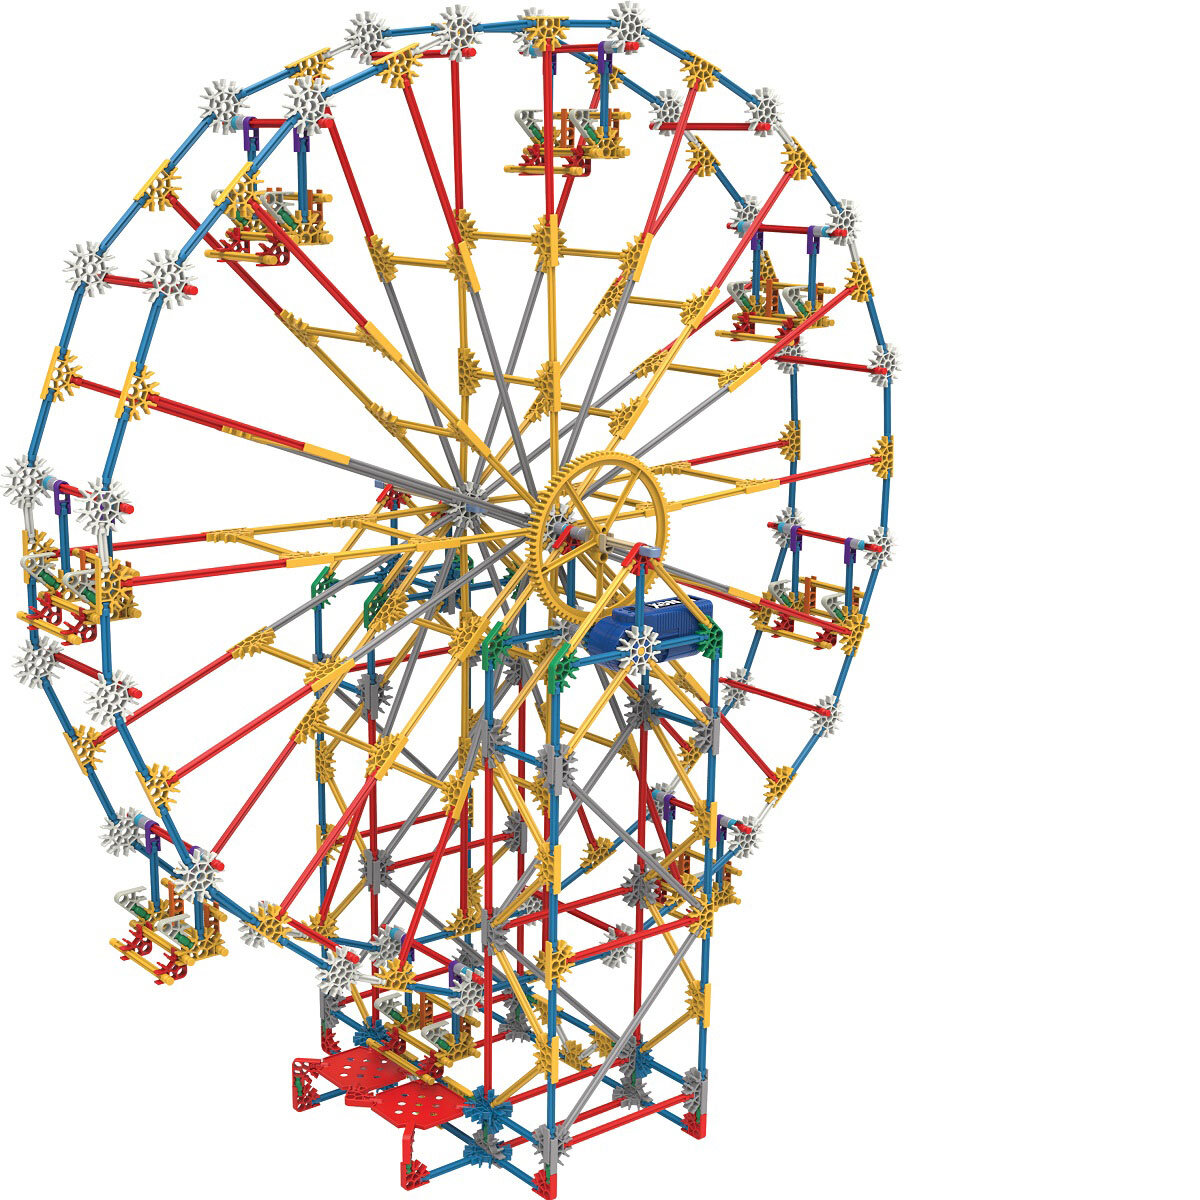 Buy K'nex 3 in 1 Classic Amusement Park Set Overview Image at Costco.co.uk